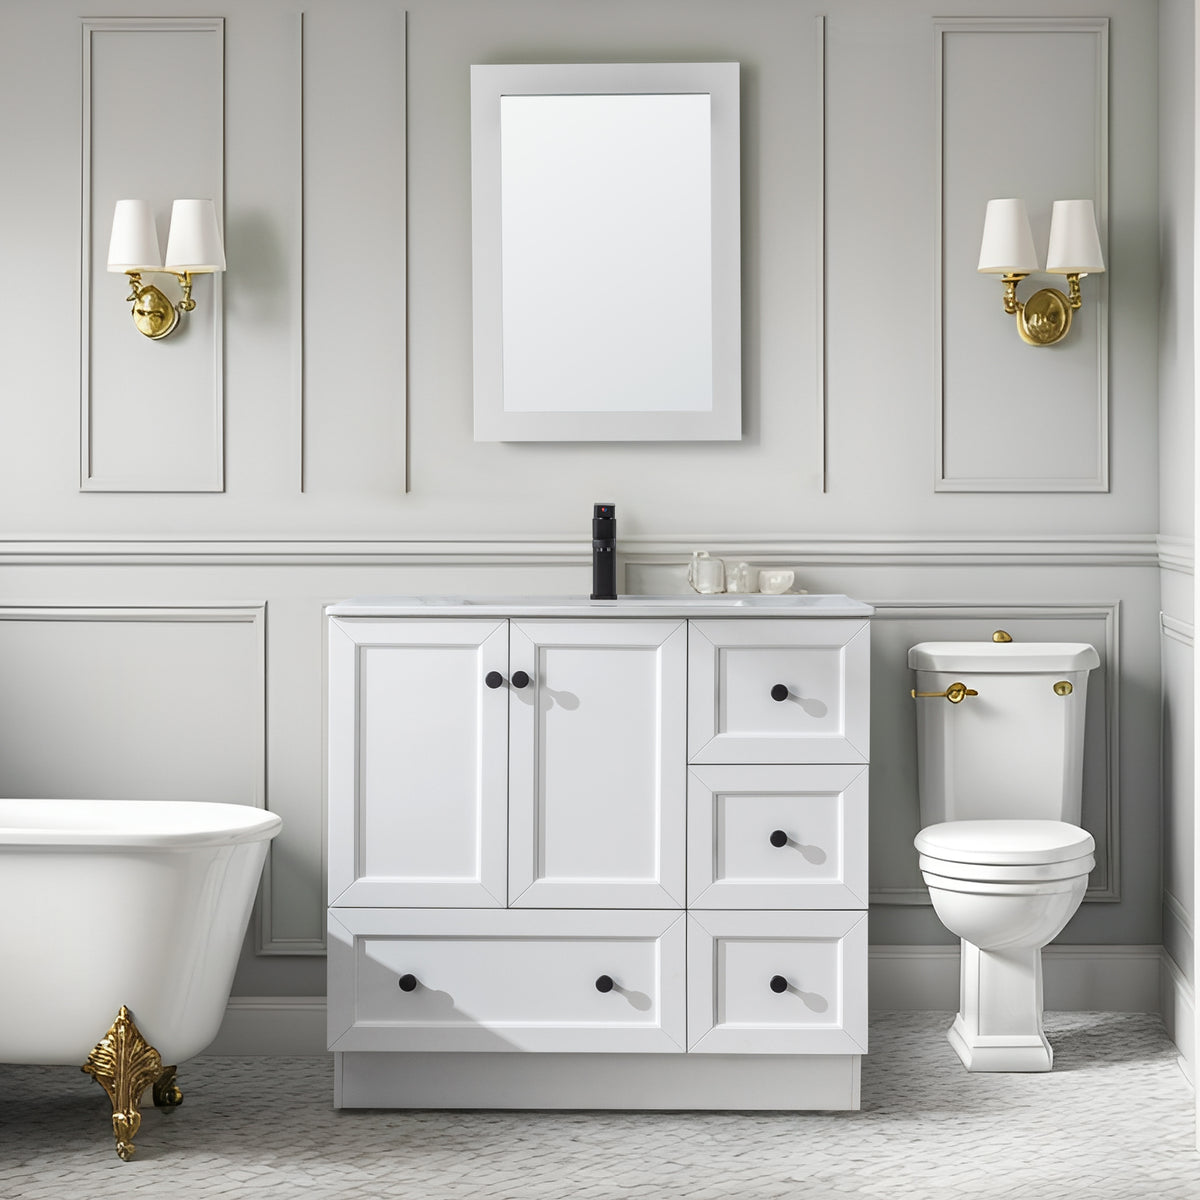 eclife 36" Bathroom Vanity Combo Set with Kitchen Base Design, Shaker Style